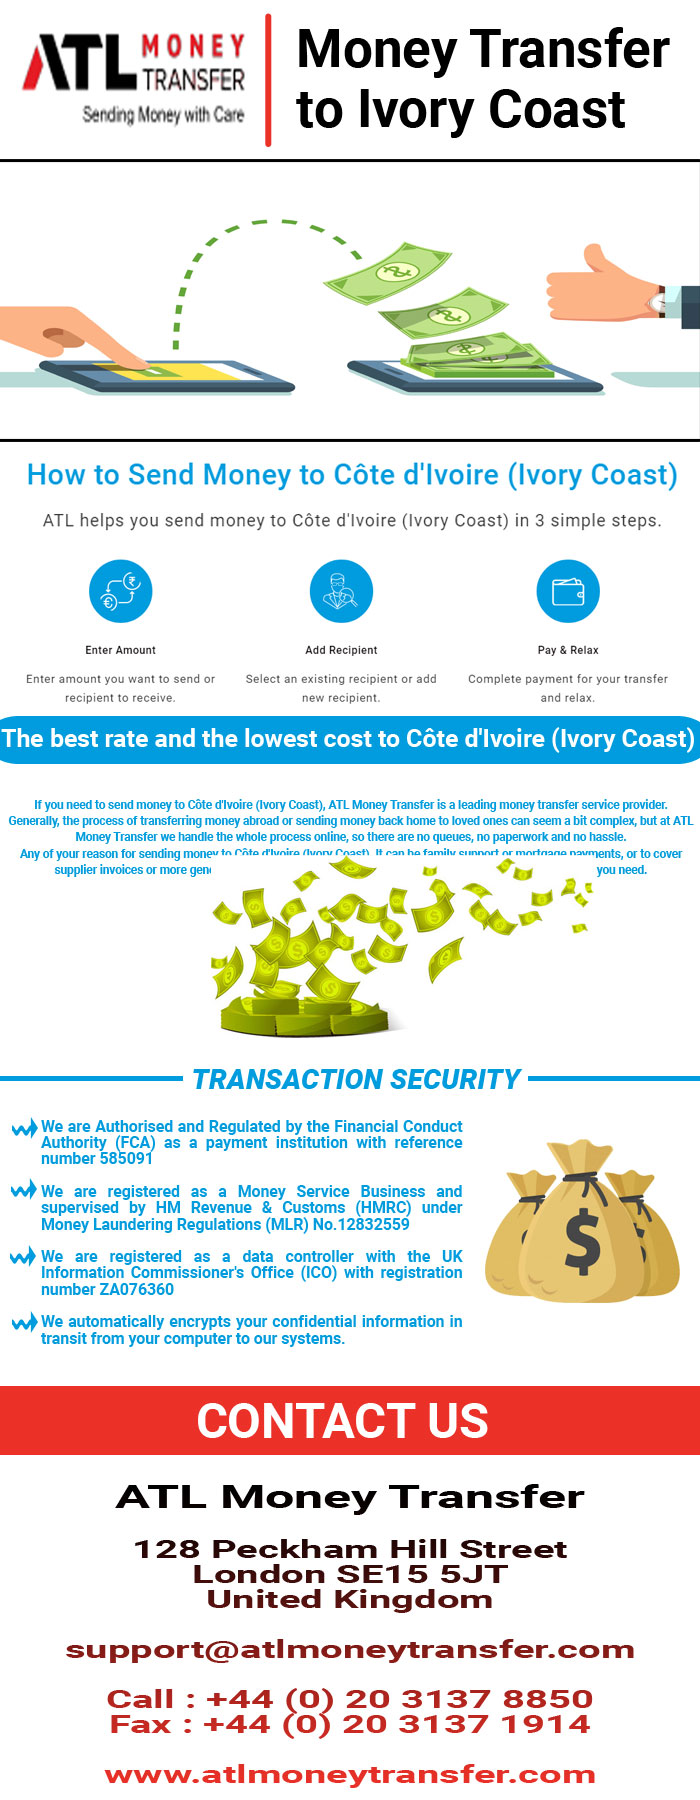 Money Transfer to Ivory Coast.jpg  by atlmoneytransfer